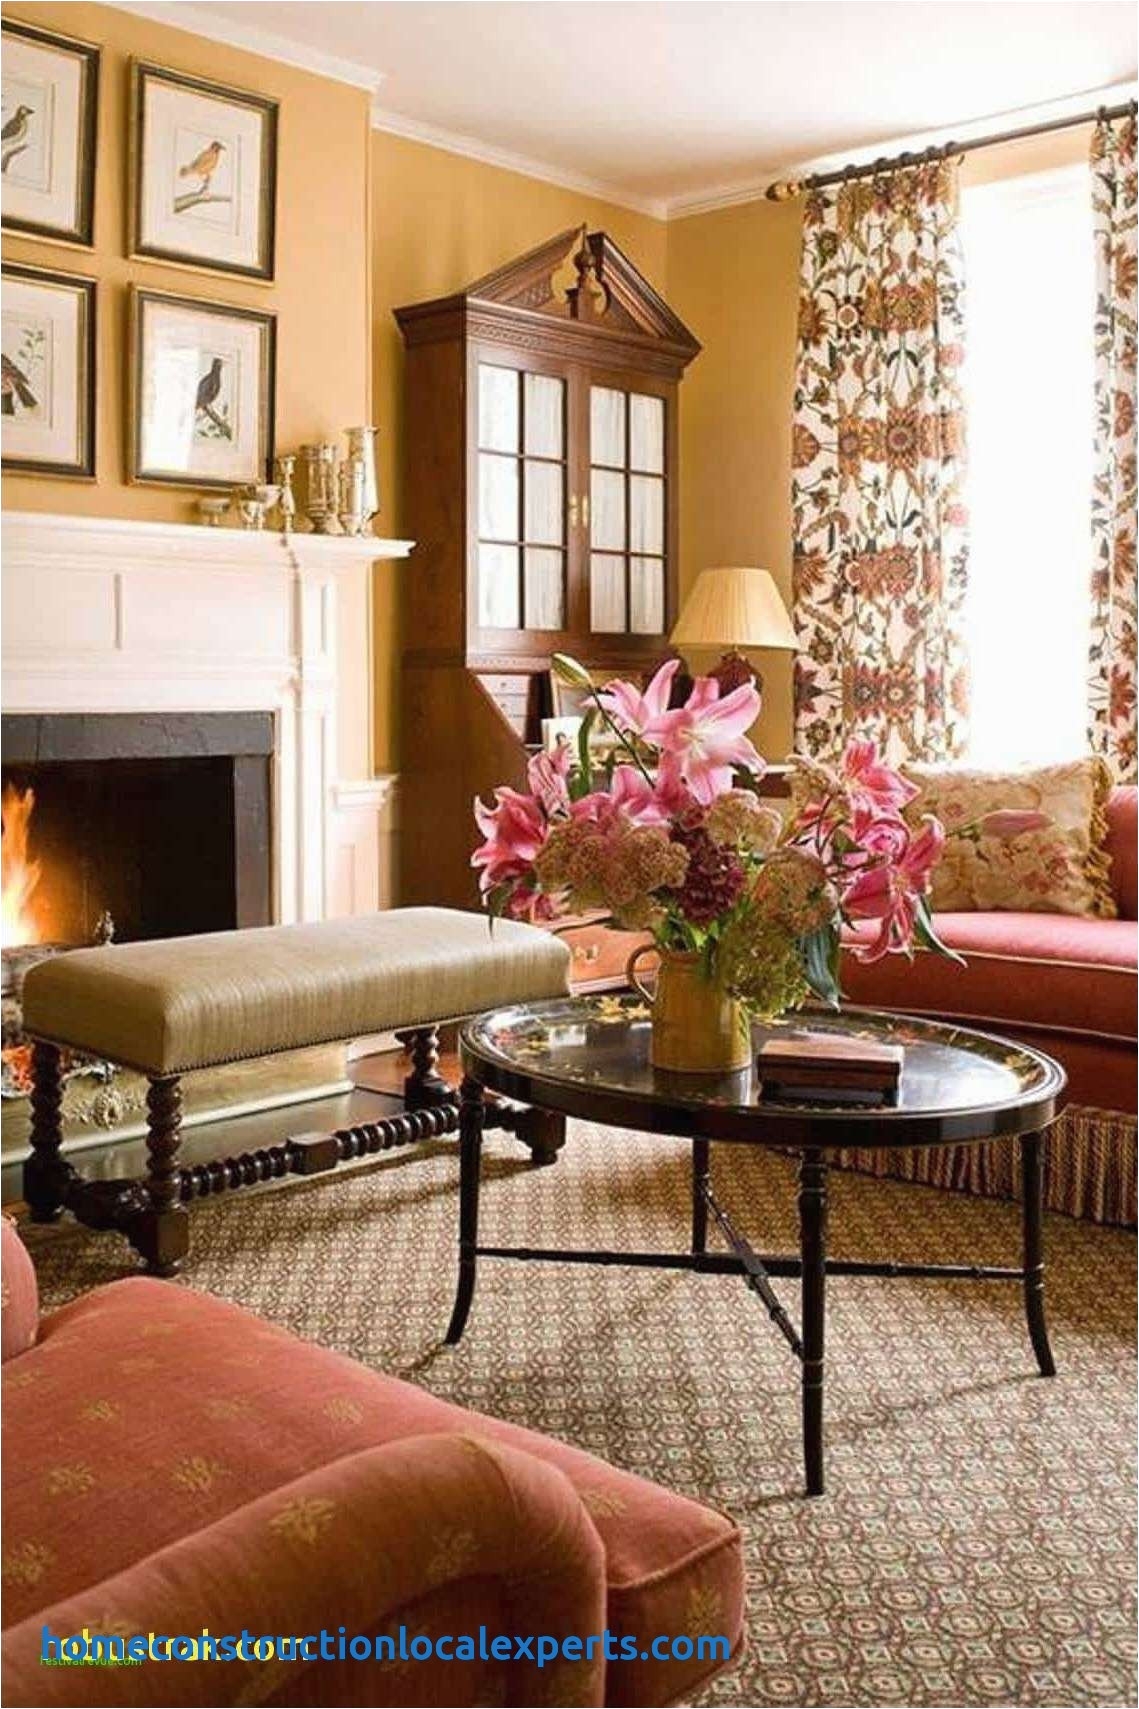 living room flower vaseh vases vase like architecture interior design follow us i 0d